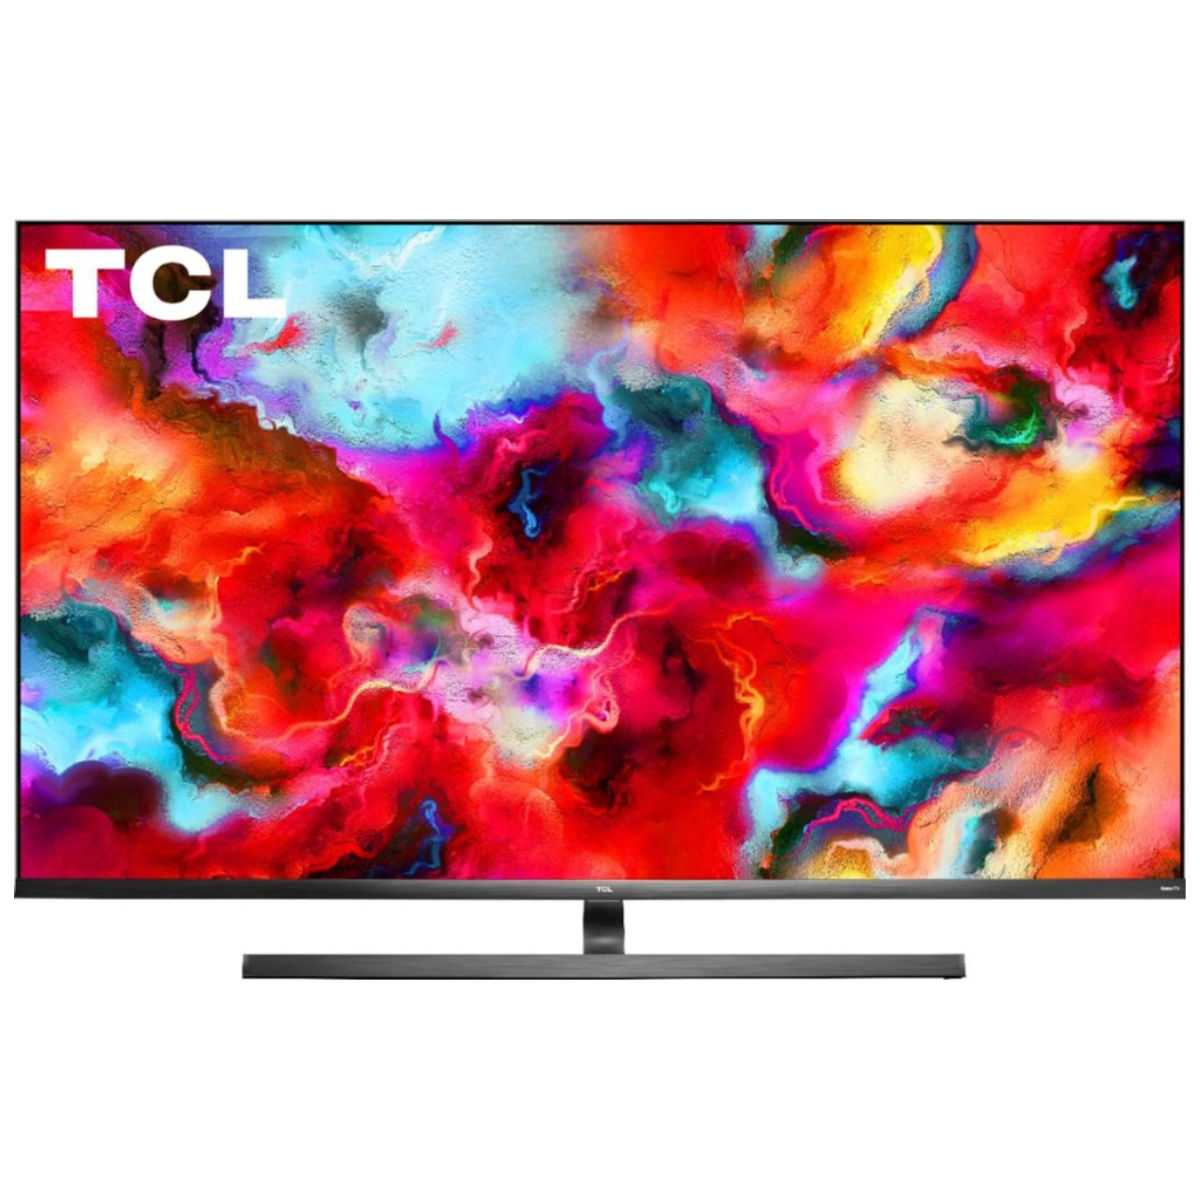 TCL 65Q825 65-Inch 4K Ultra Smart HDTV